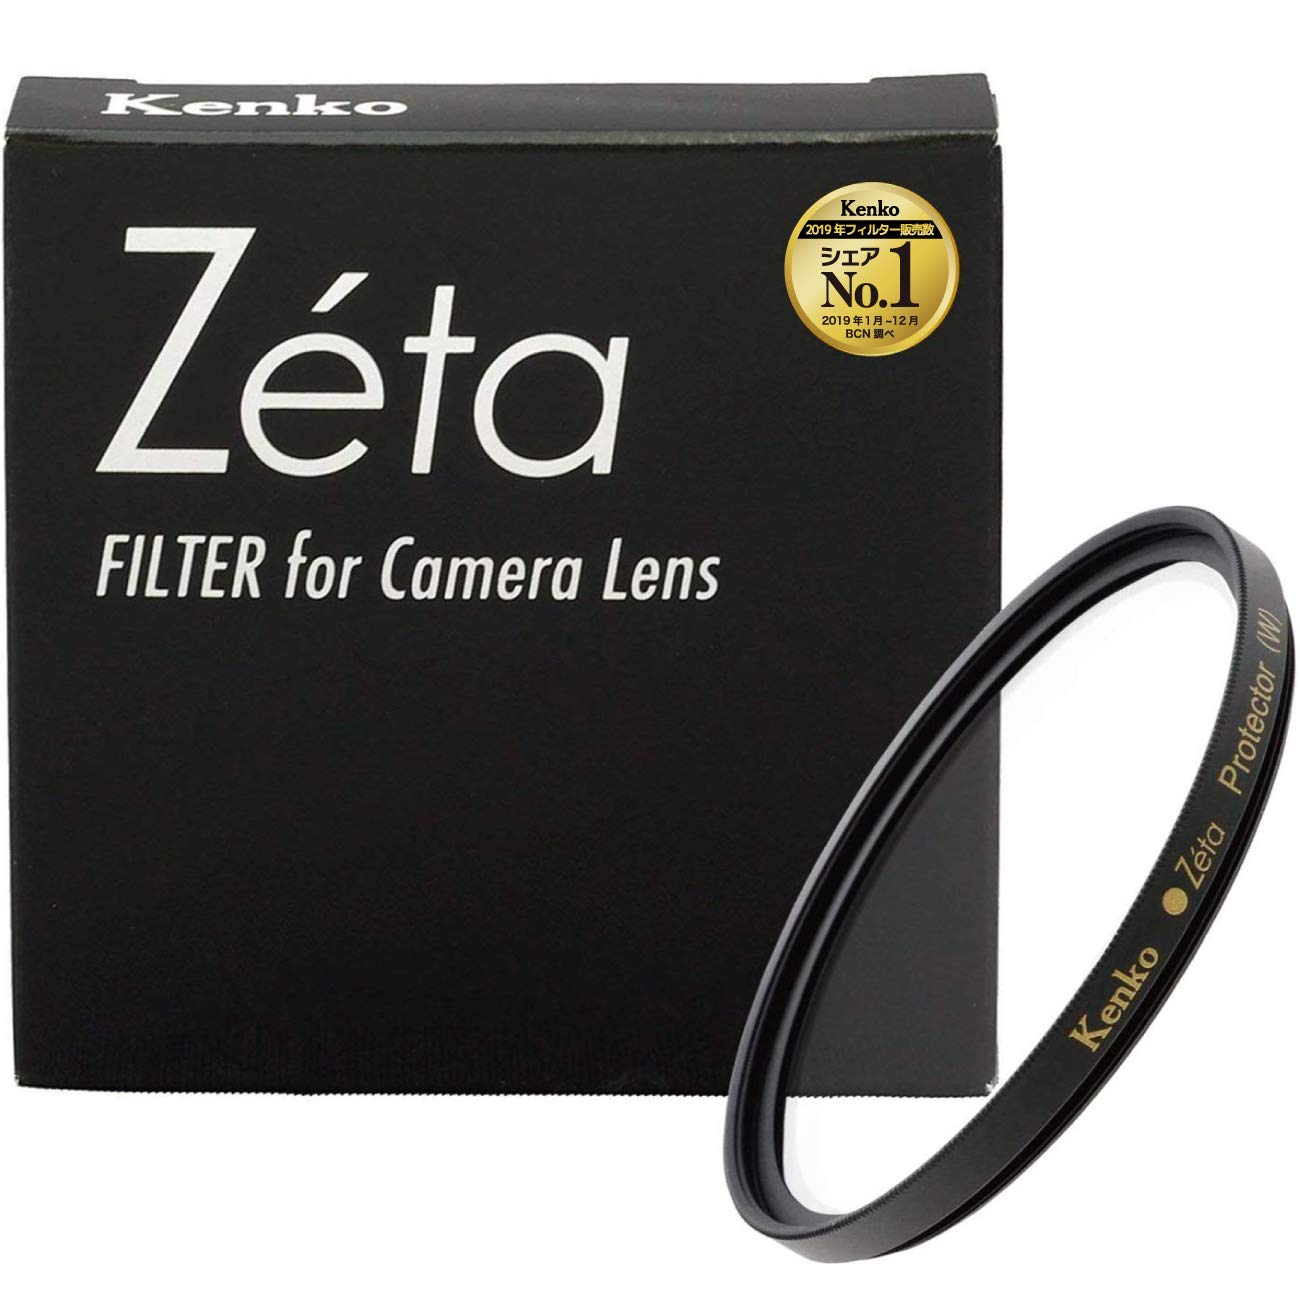 Kenko レンズフィルター Zeta プロテクター 55mm レンズ保護用 レンズクロス ケース付 390900